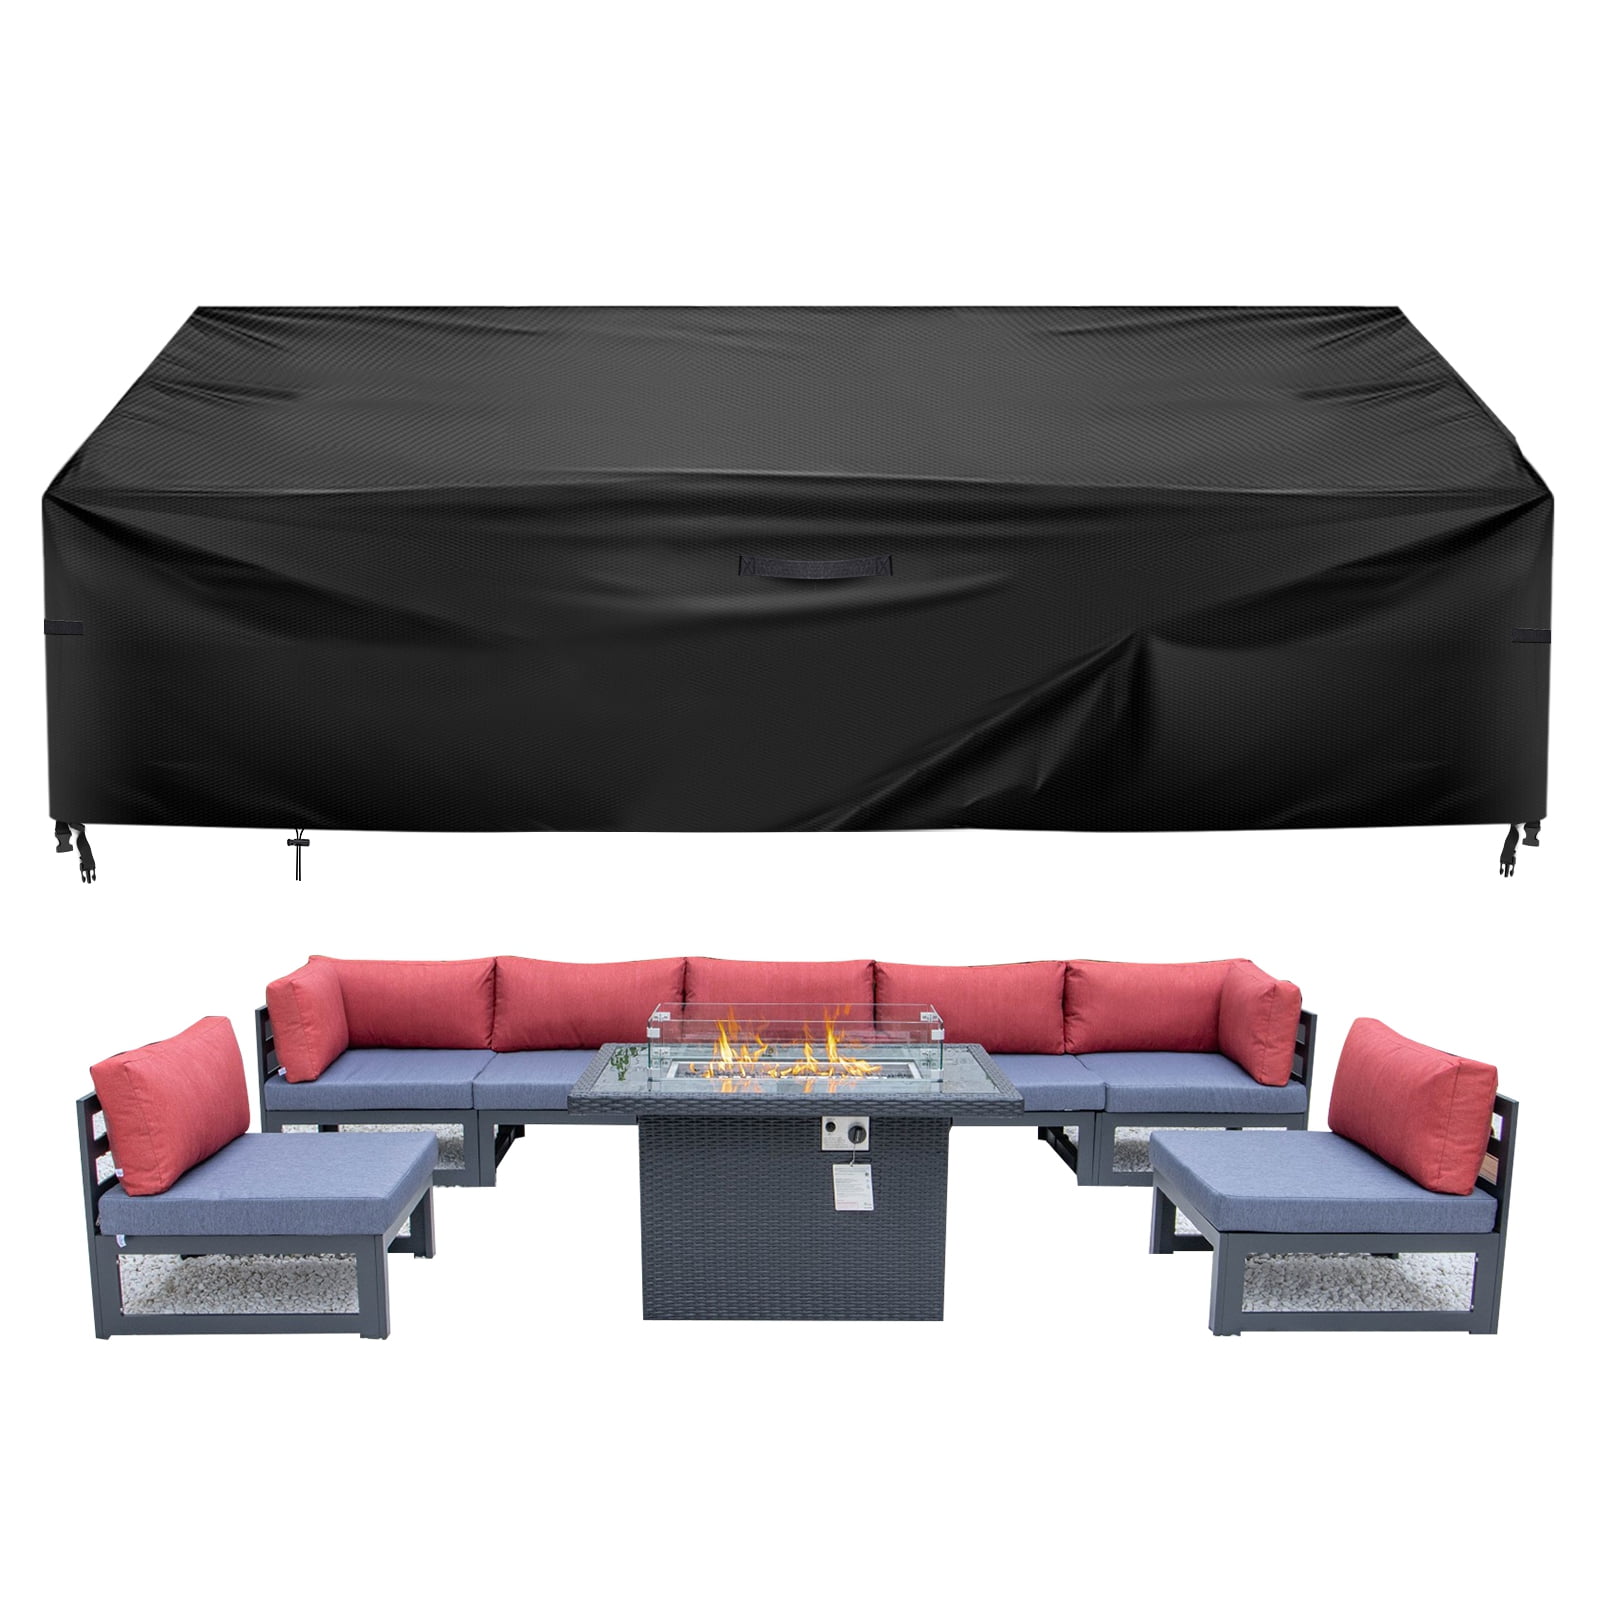 Waterproof Furniture Sofa Chair Table Desk Cover Garden Outdoor Patio Protector 